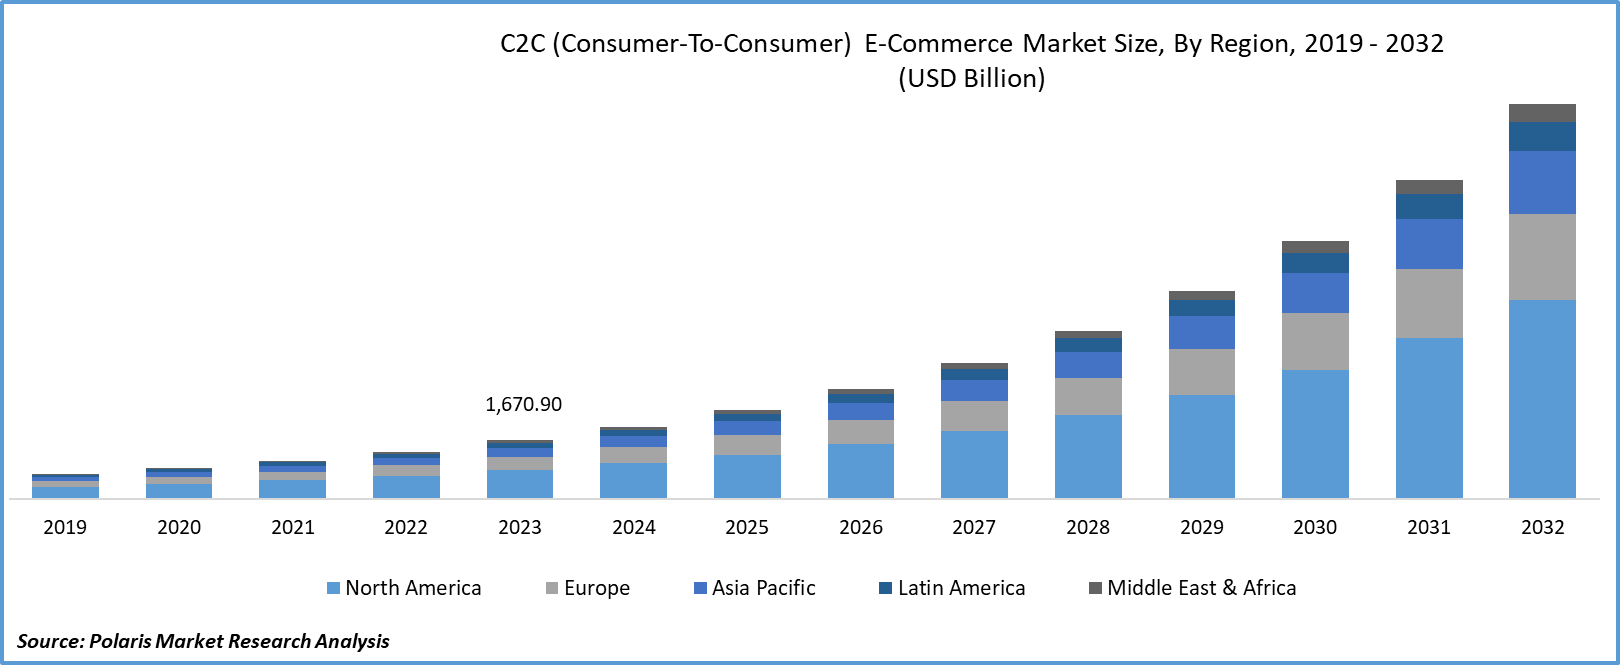 C2C (Consumer-To-Consumer) E-Commerce Market Size